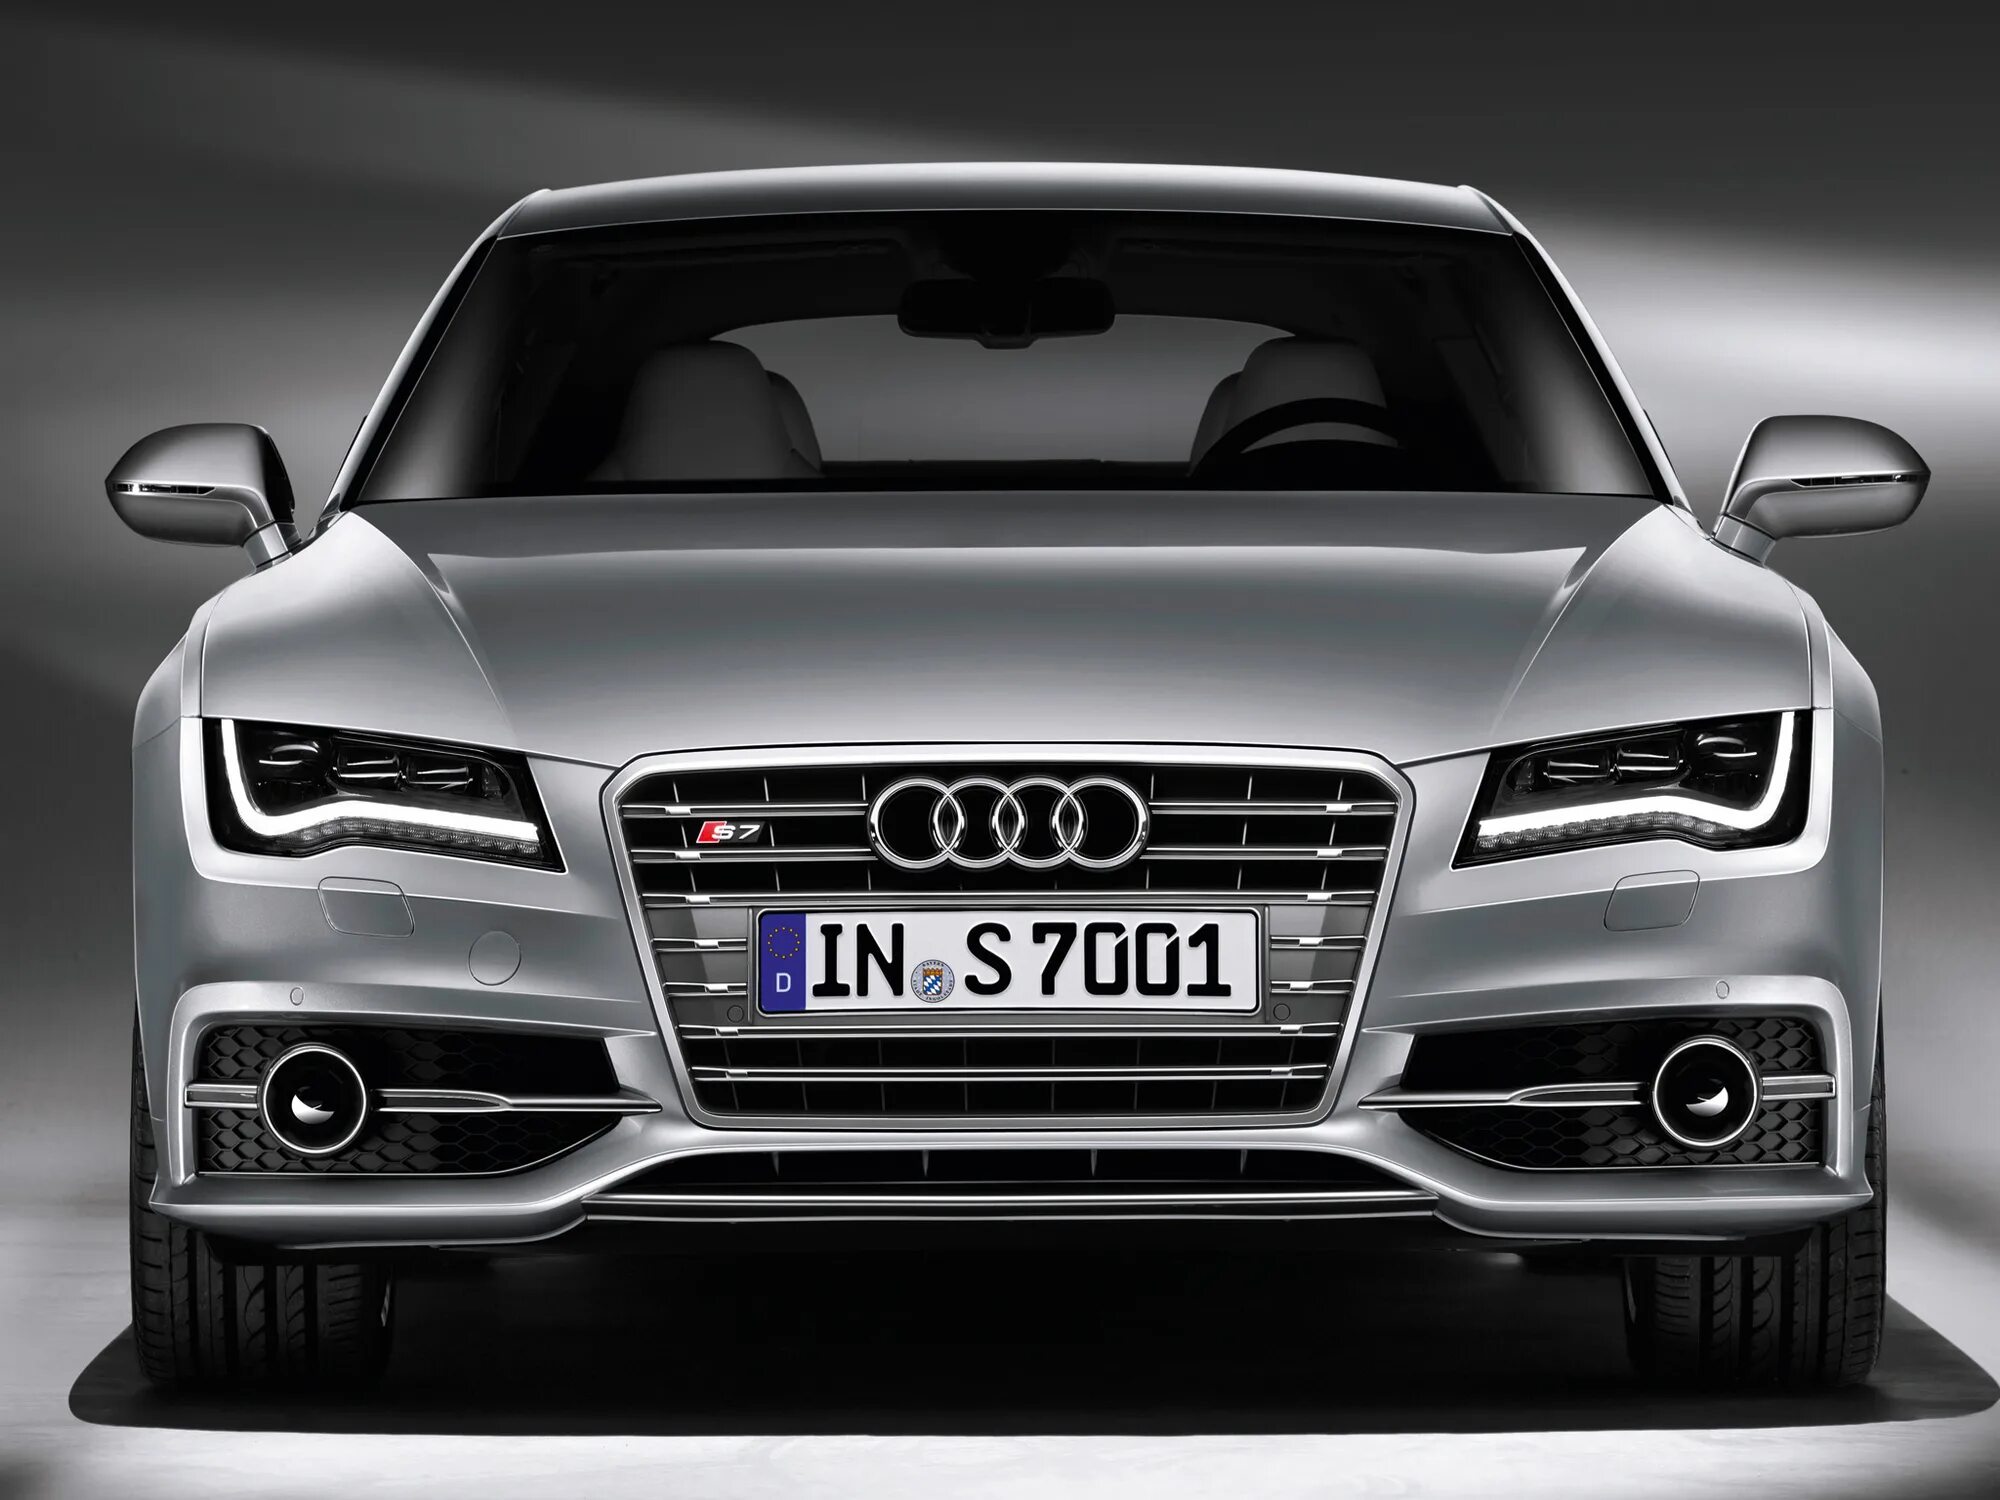 4g 2011. Audi a7 2012. Audi s7 2012. Audi s7 Sportback (2012). Audi Audi a7.